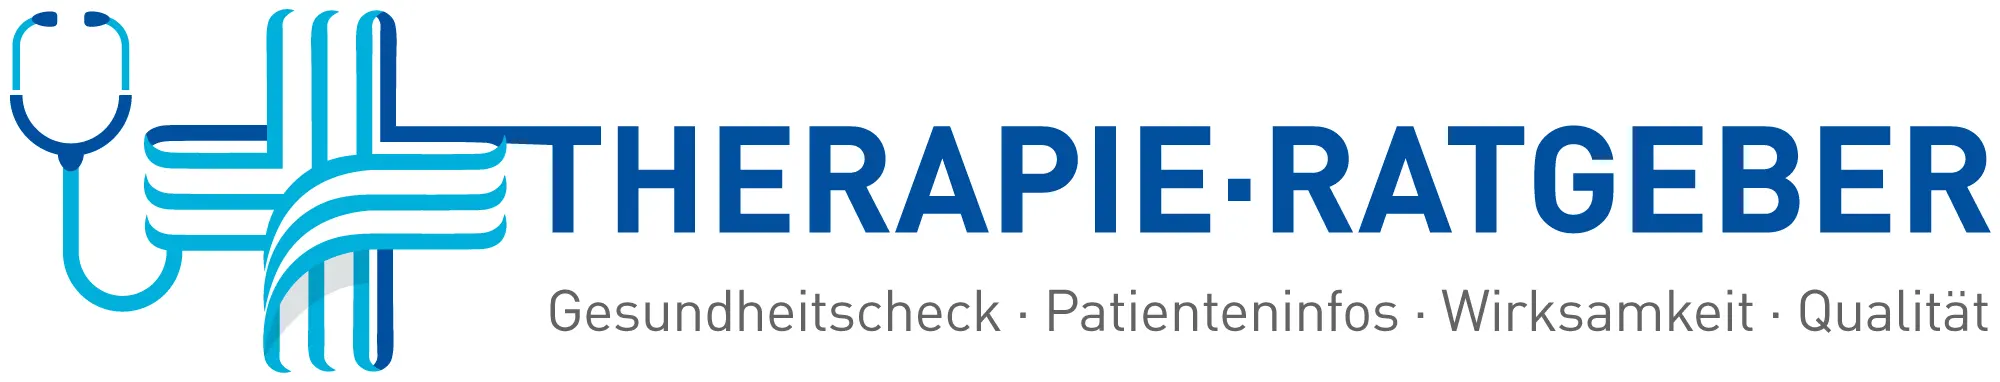 Online Therapie ratgeber Logo